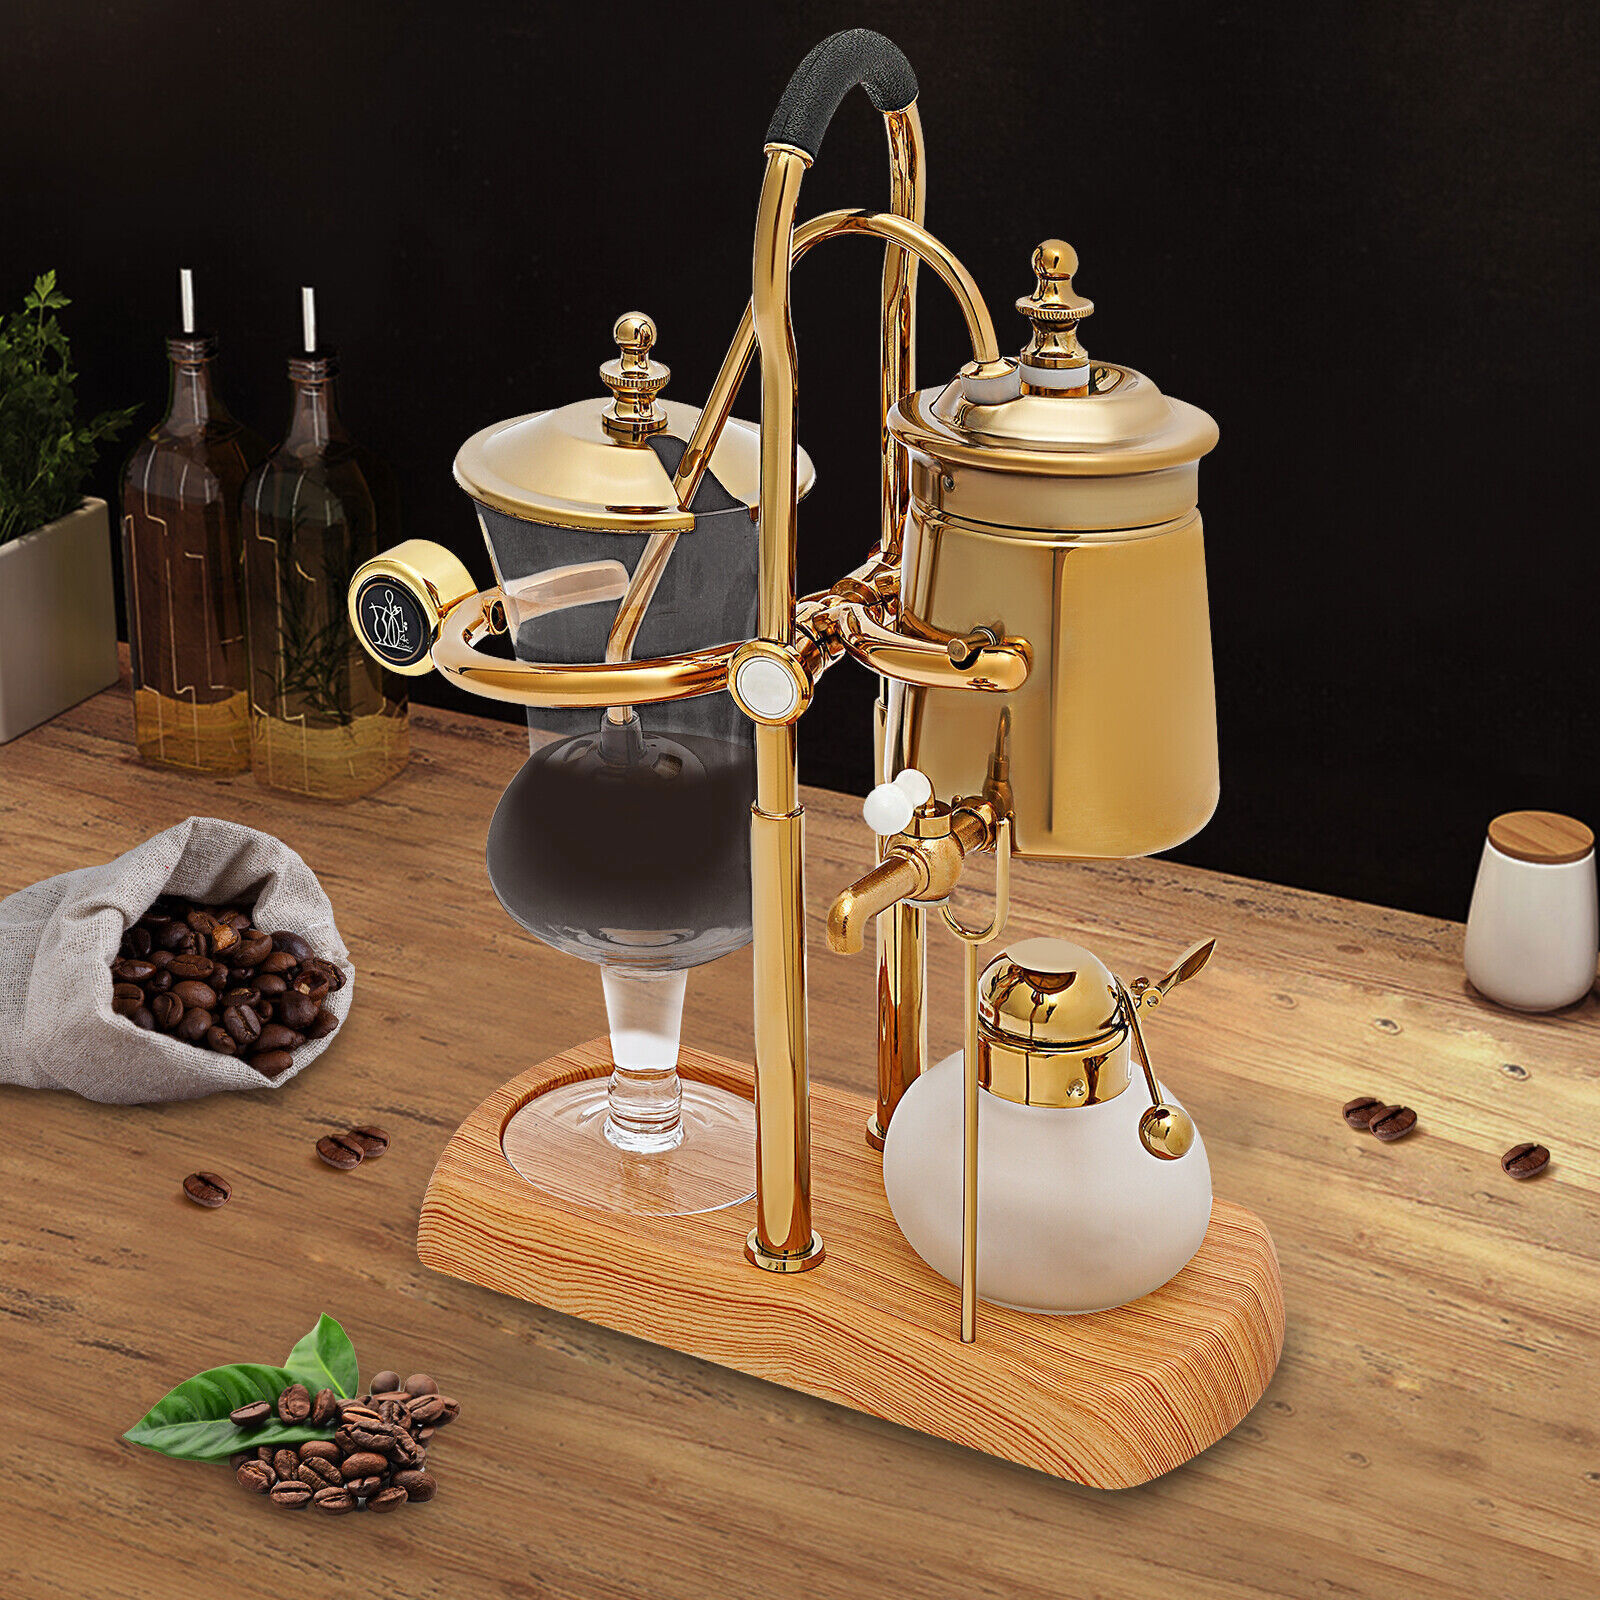 Retro Coffe Maker Belgian Belgium Luxury Royal Family Balance Syphon Coffee Make